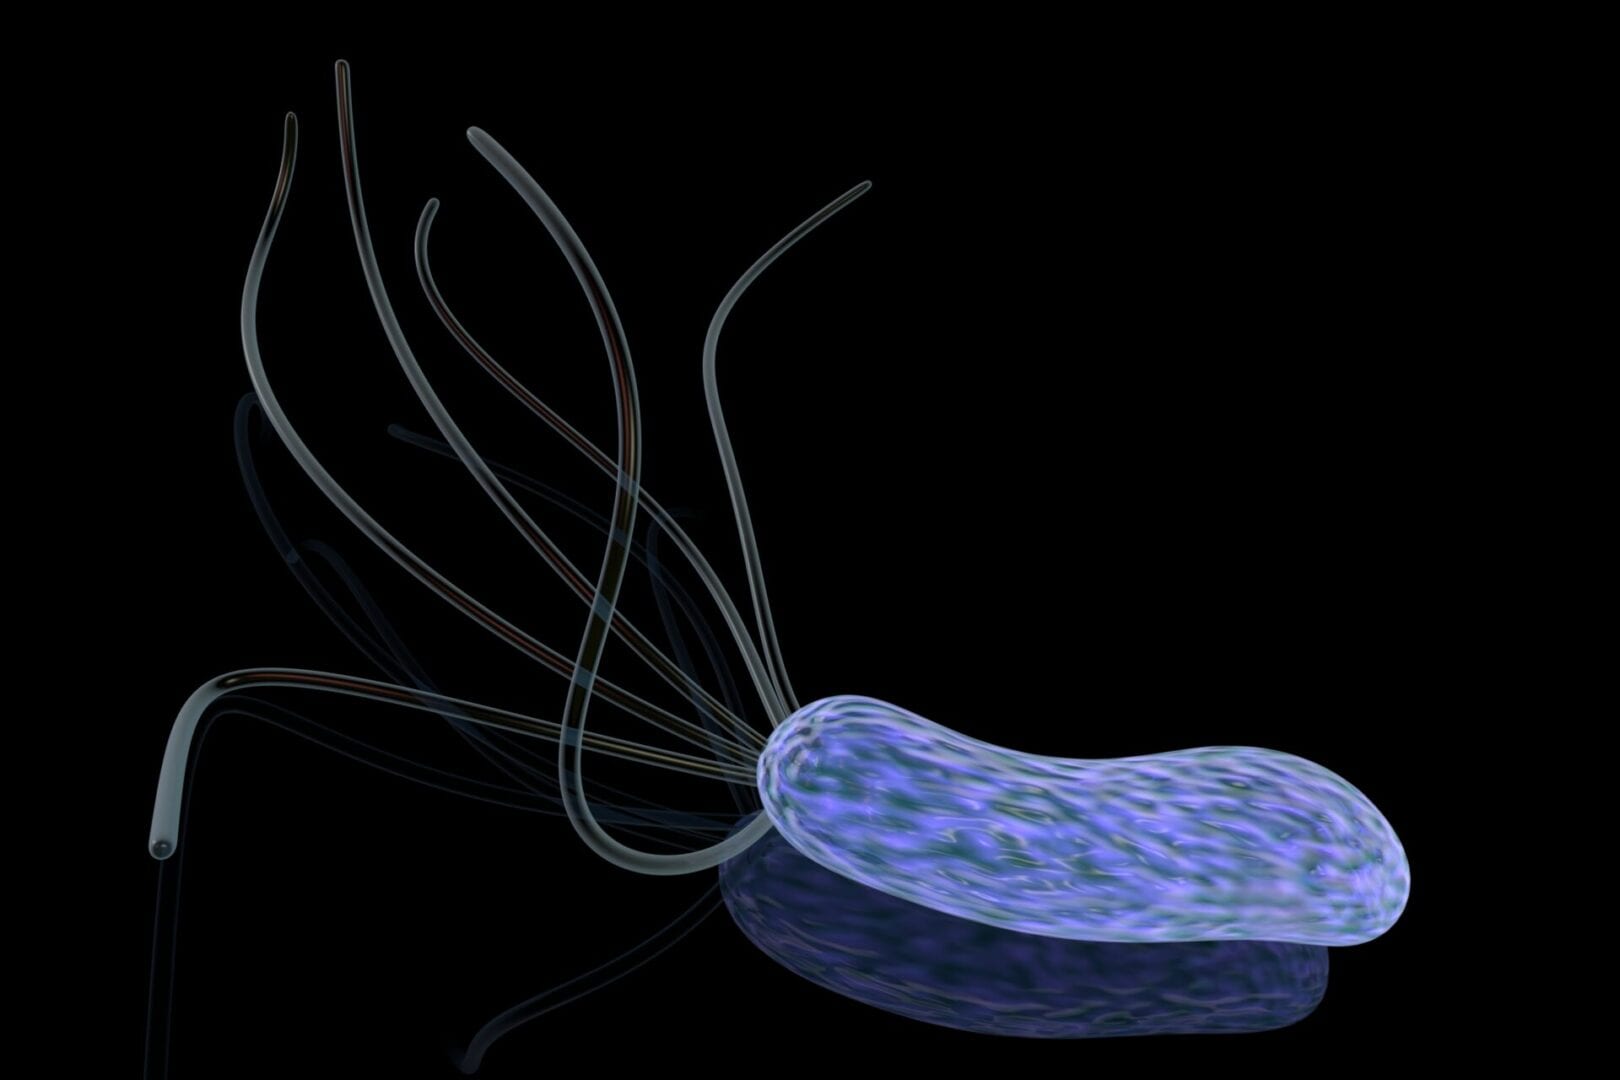 3D rendered image of  bacterium Bartonella.